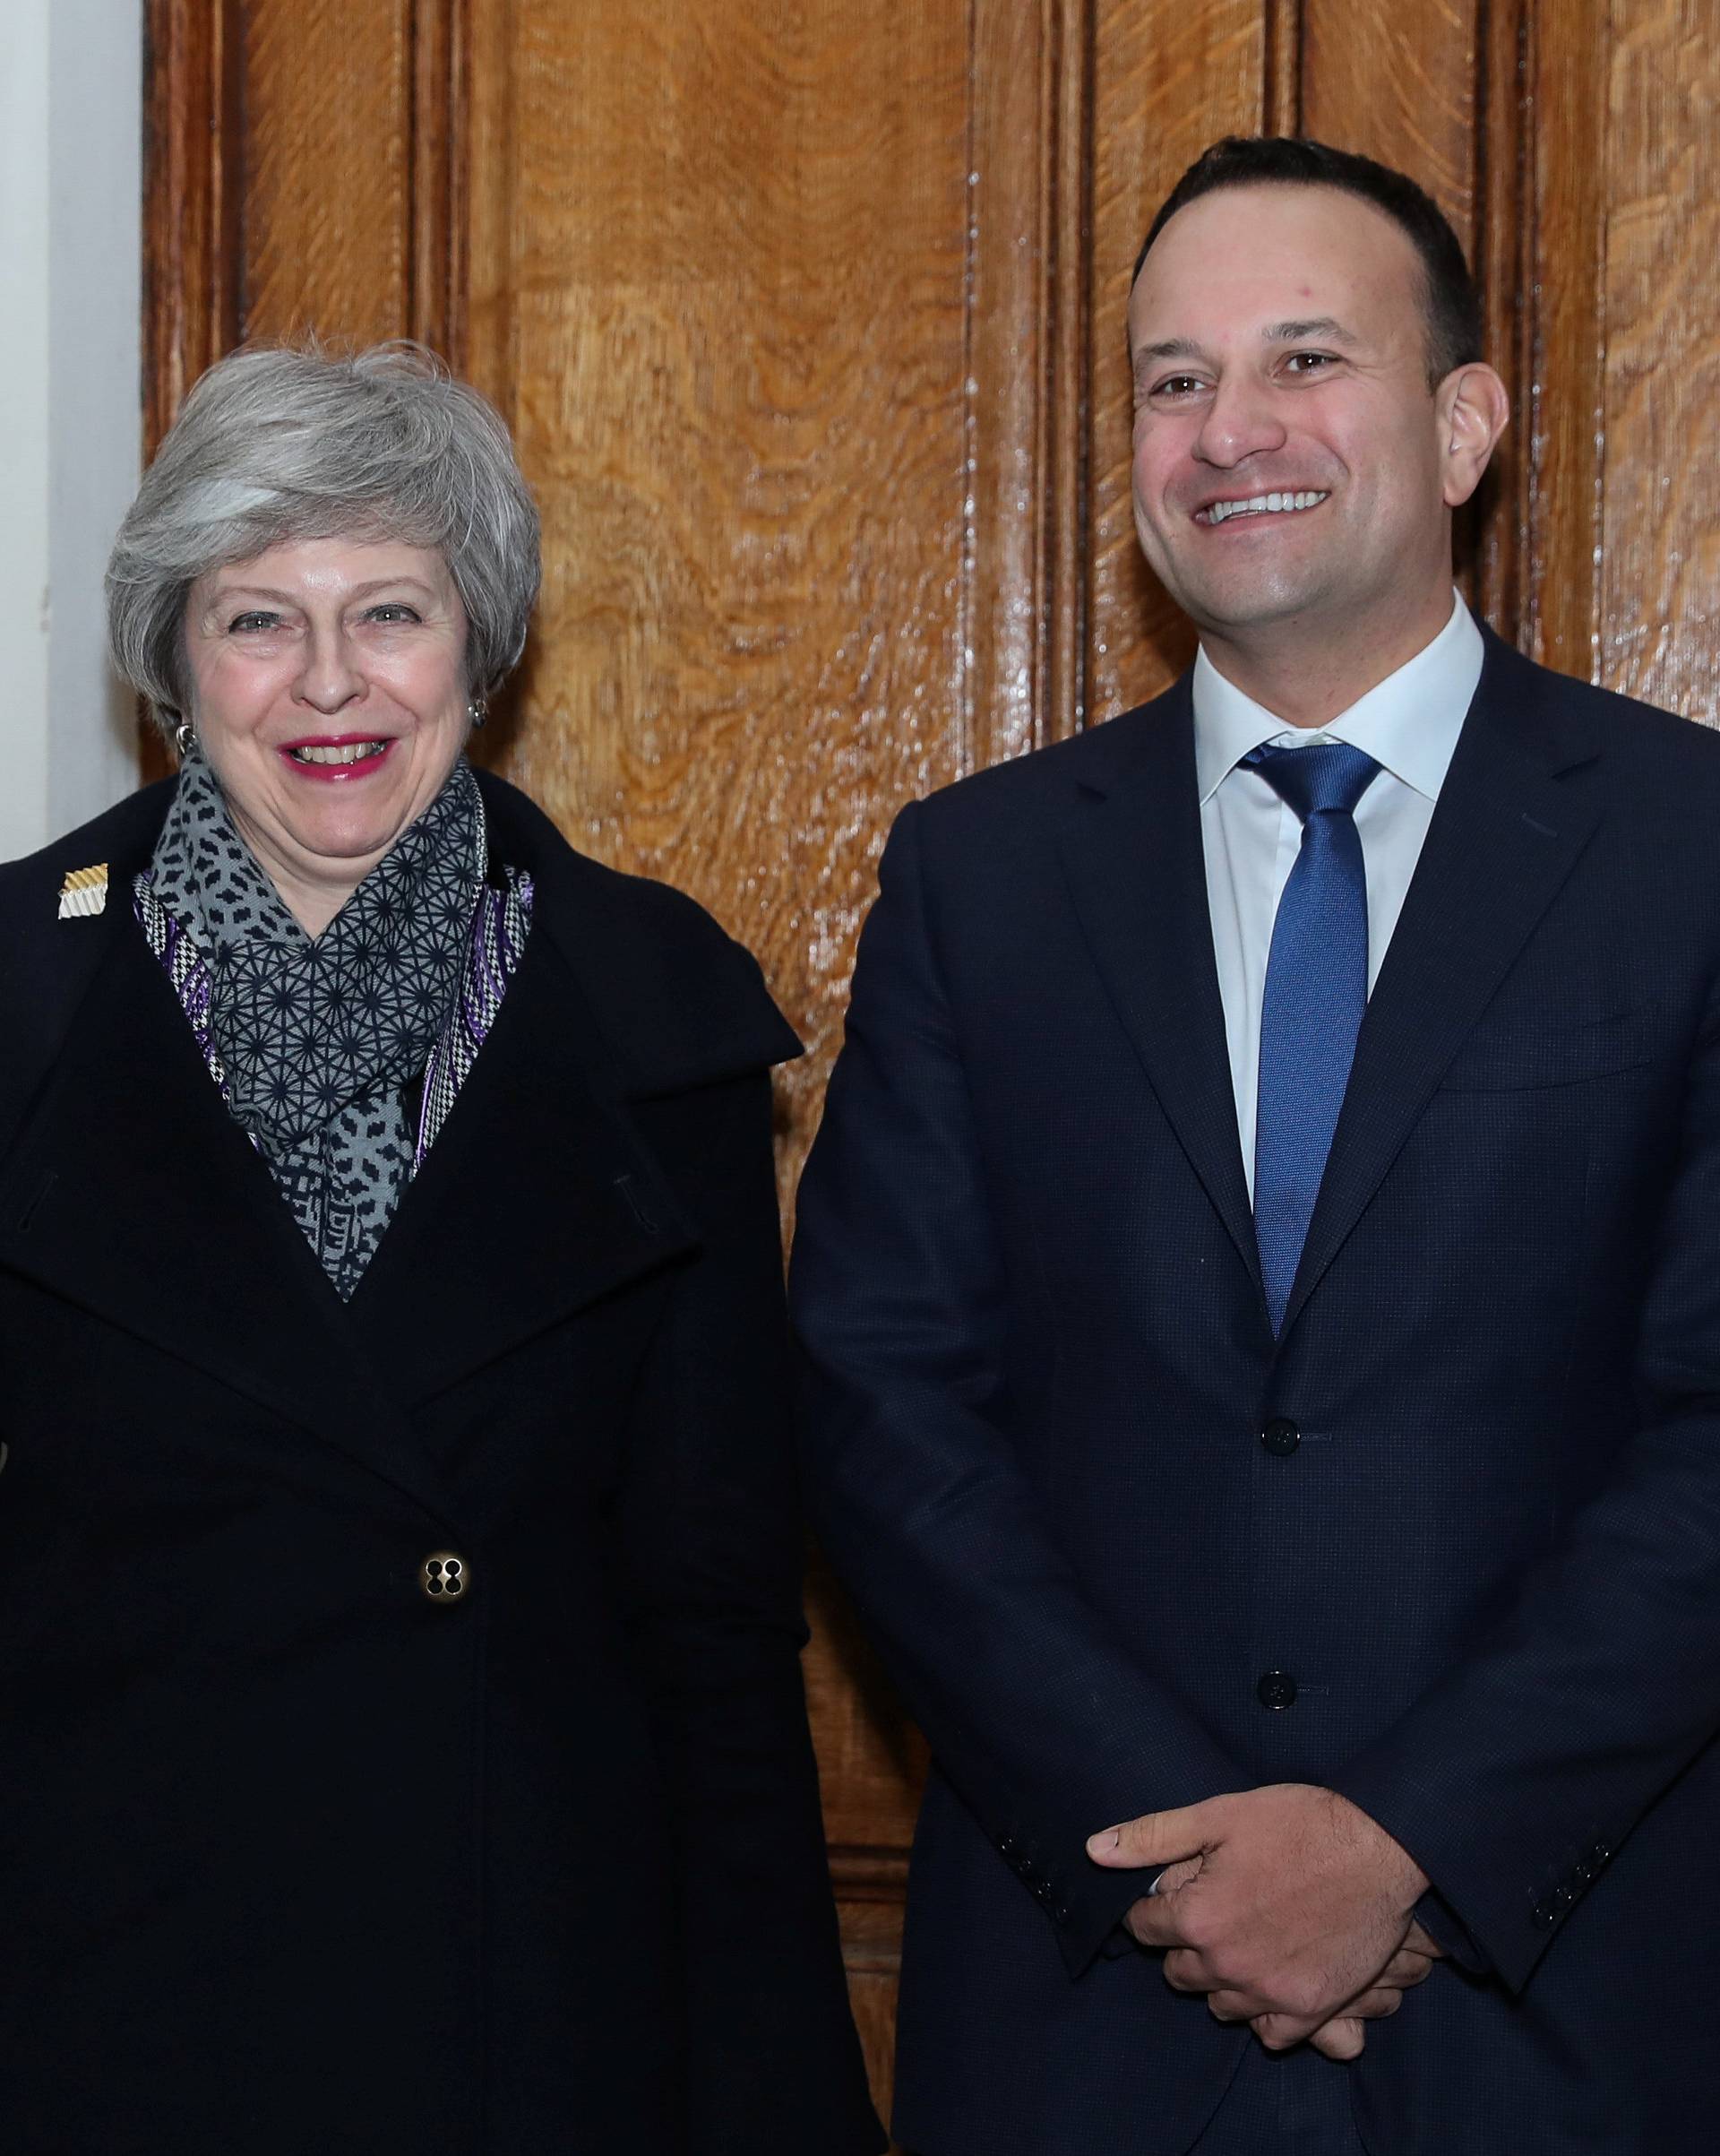 Britain's Prime Minister Theresa May meets Taoiseach Leo Varadkar in Dublin